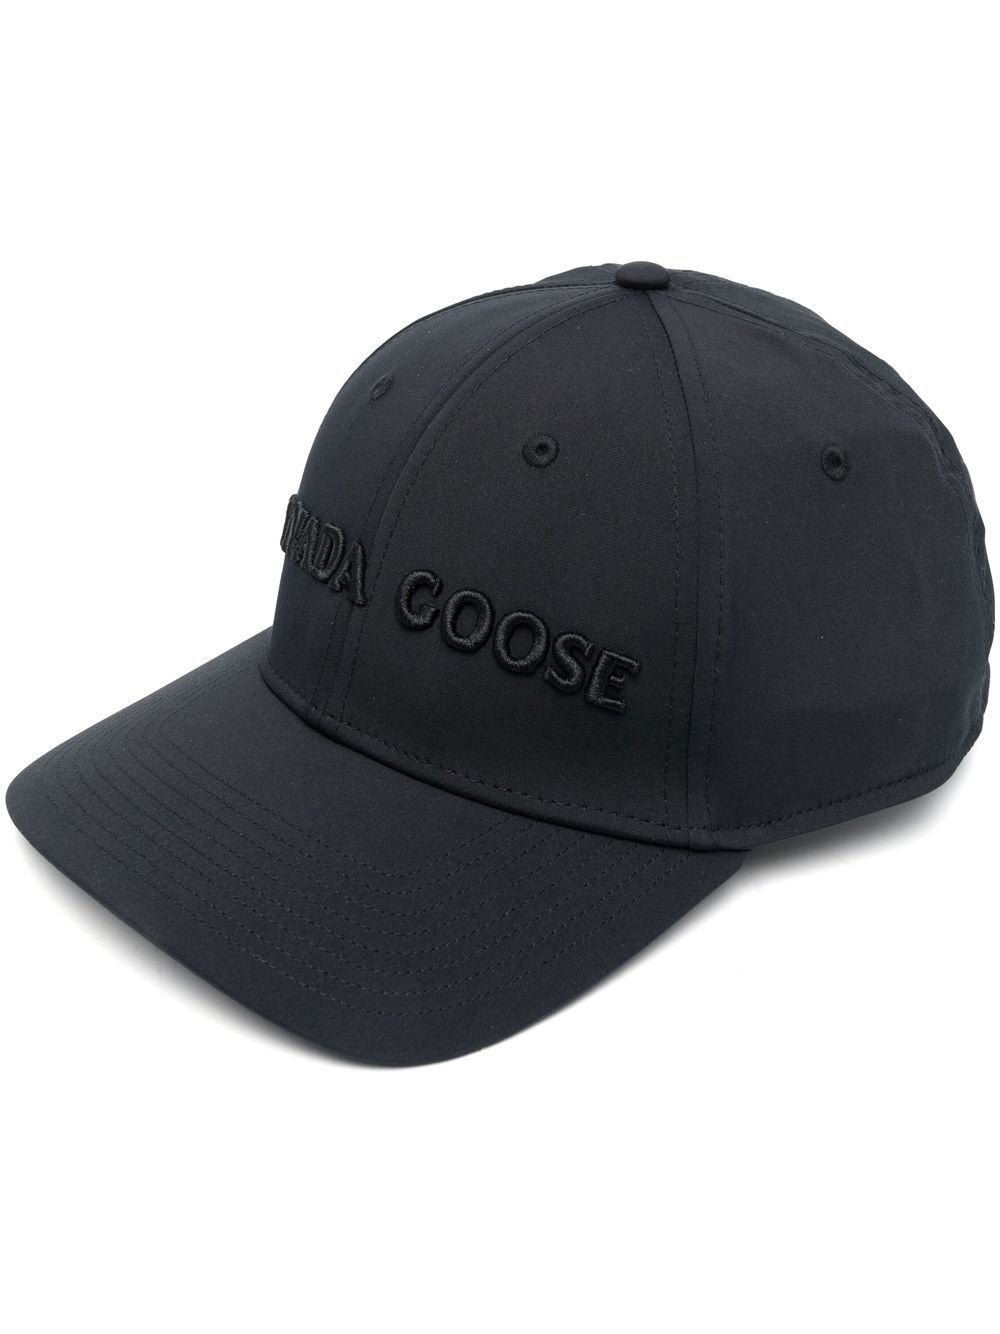 canada goose casquette à logo brodé - noir